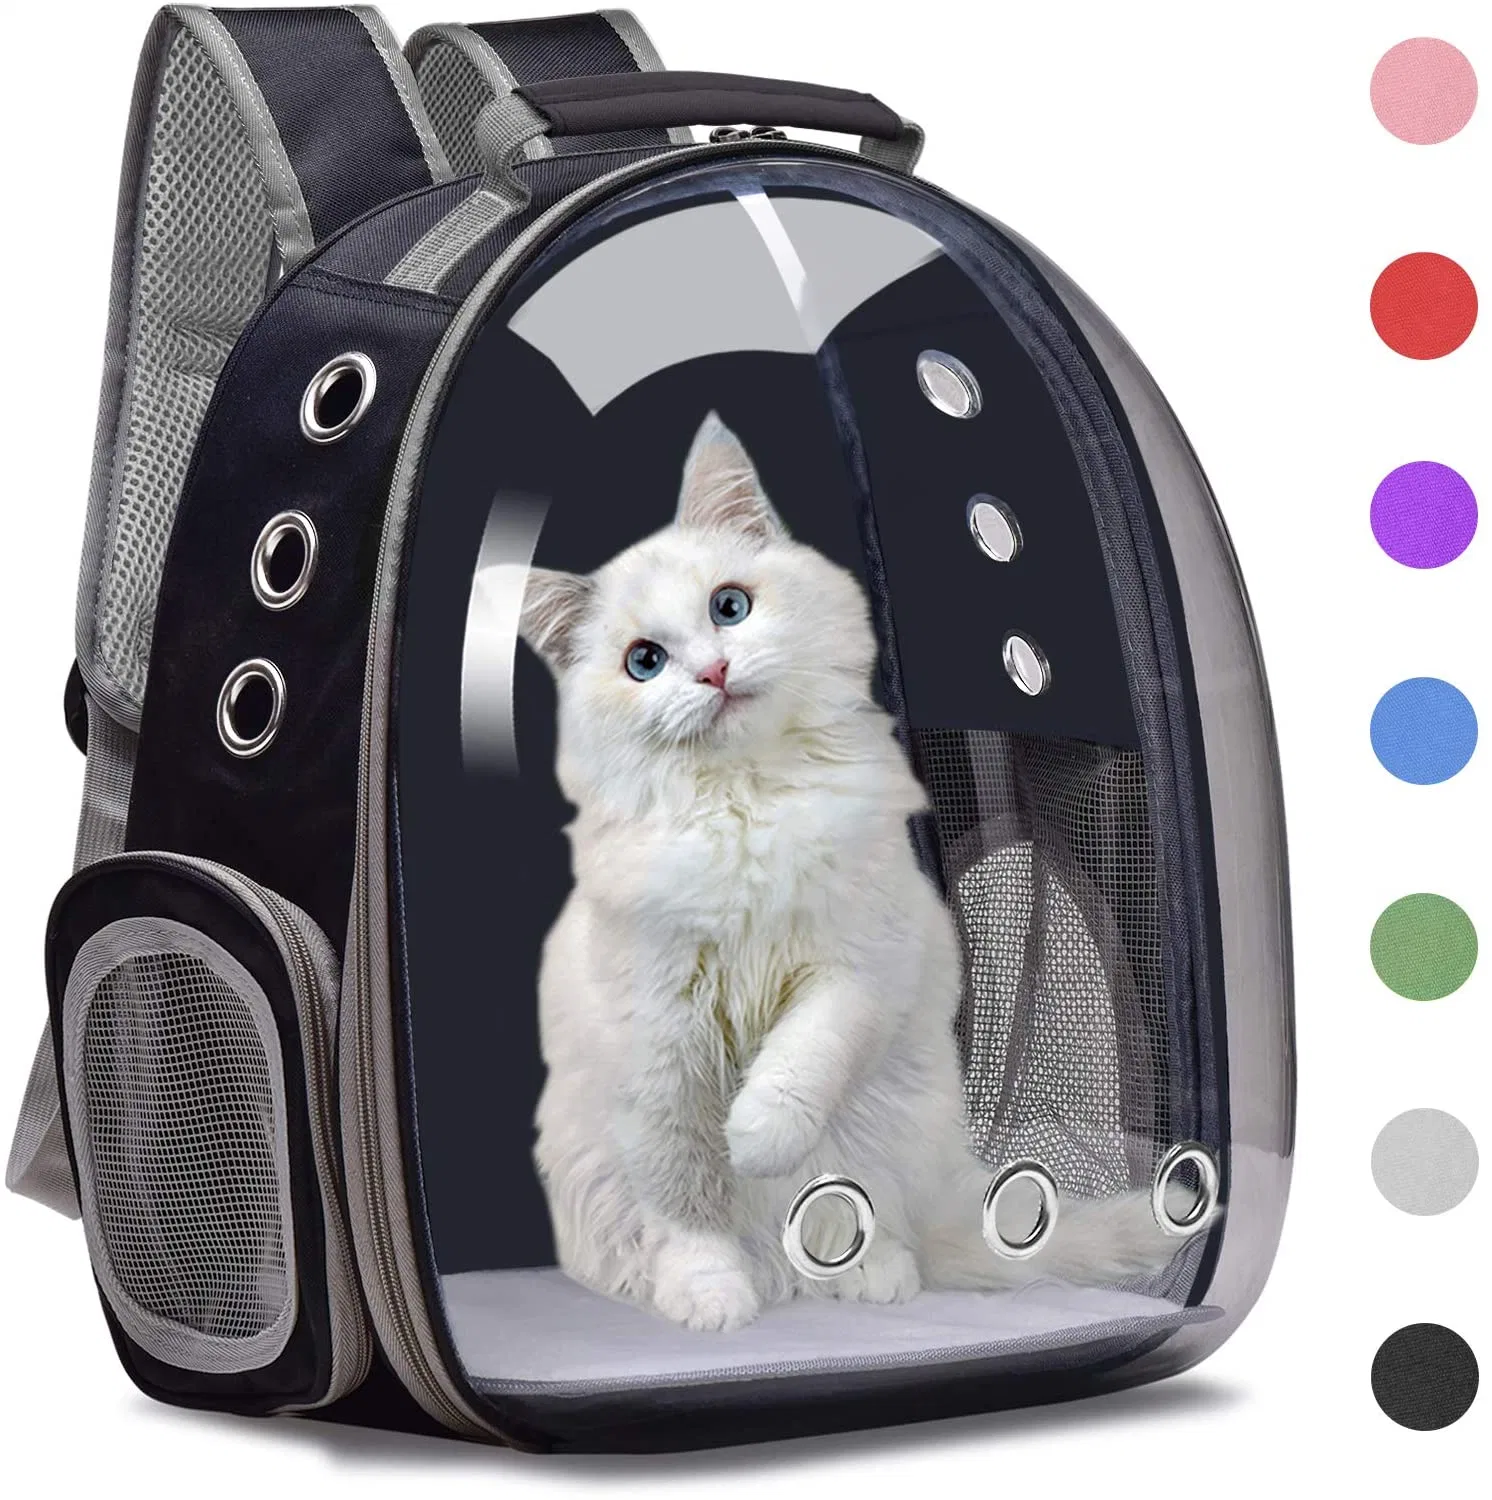 Space Capsule Pet Carrier Bag Dog Hiking Backpack